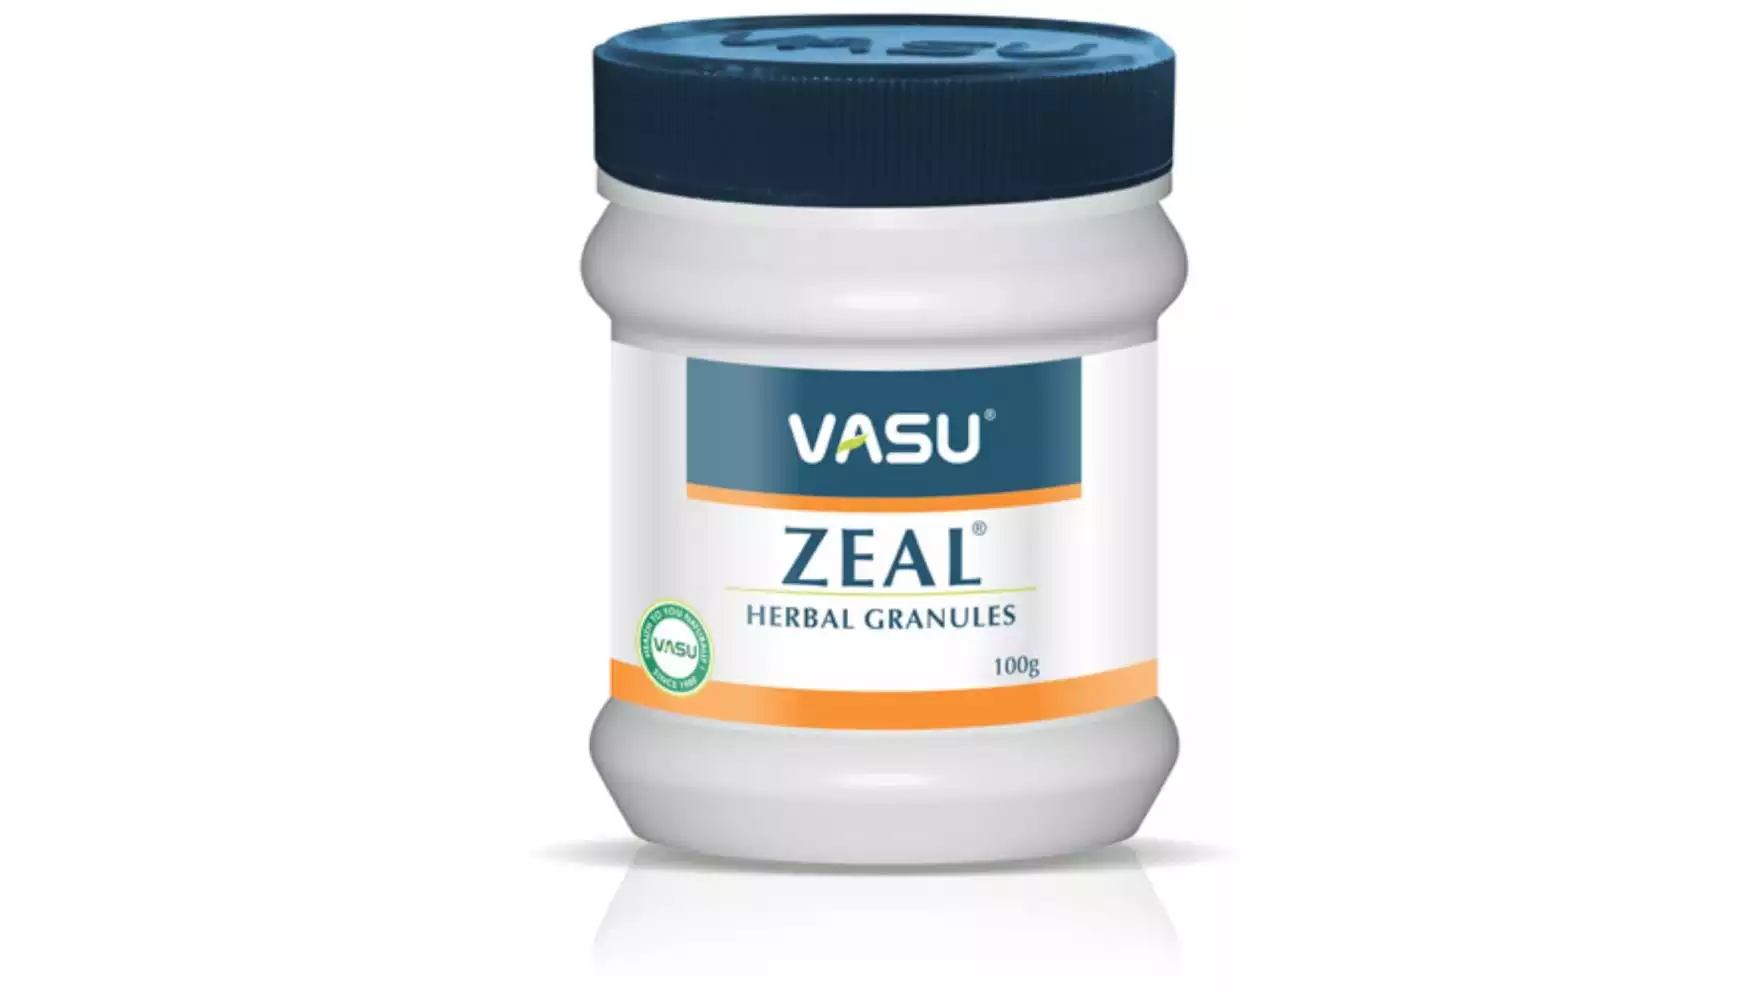 Vasu Zeal Herbal Granules (100g)